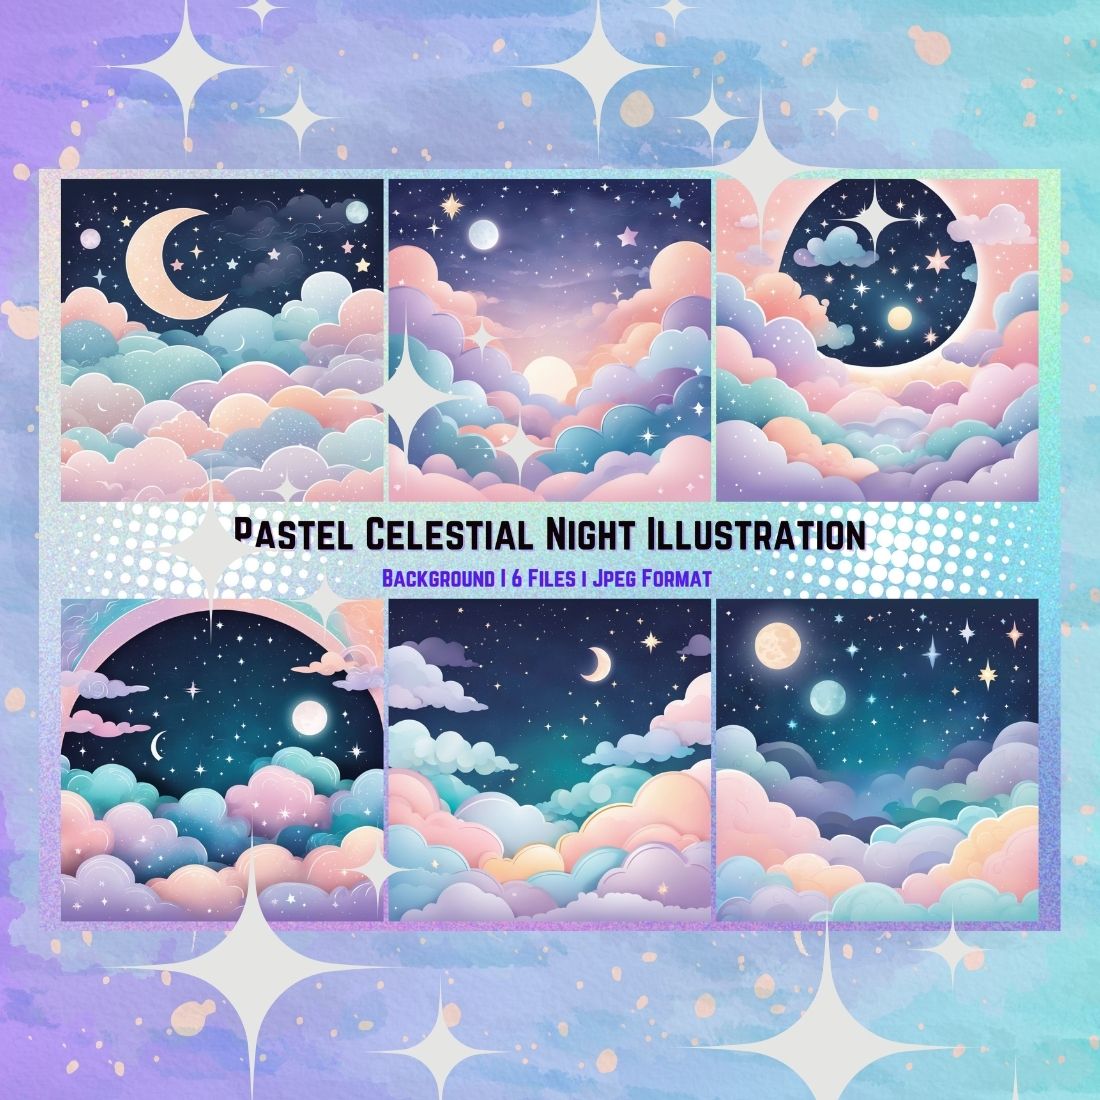 Pastel Celestial Night Illustration cover image.